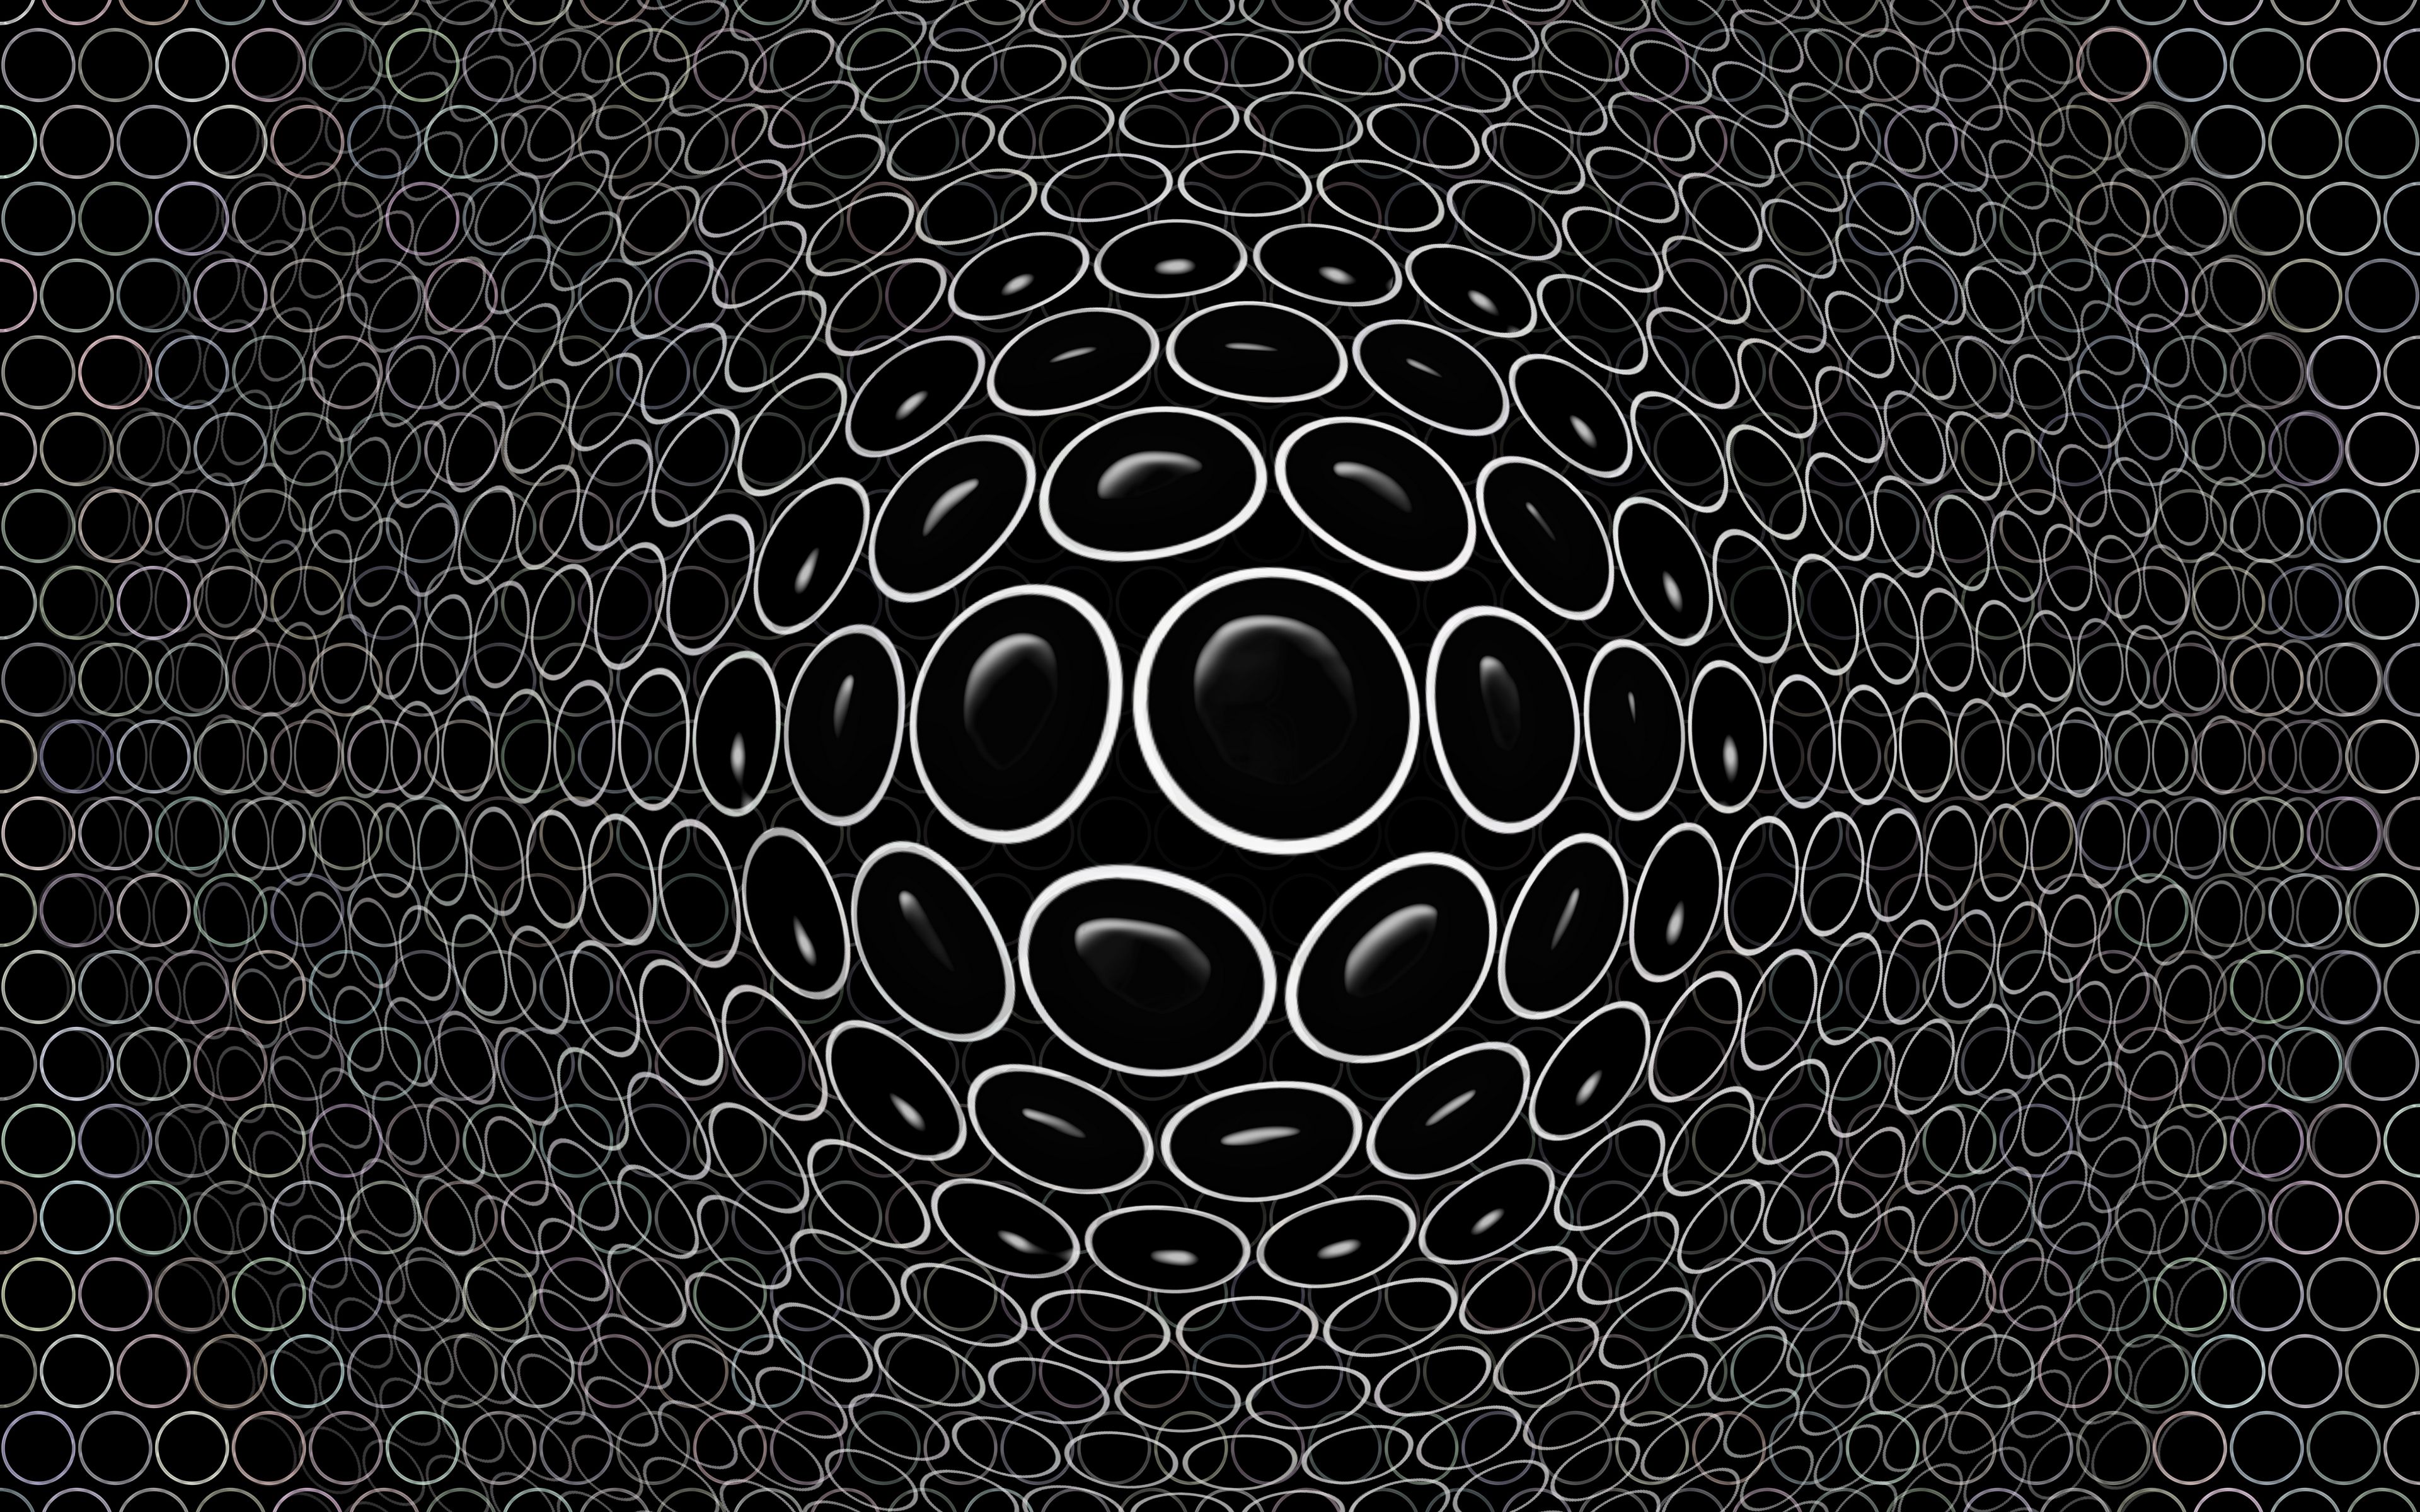 Download wallpaper 3840x2400 convex, embossed, realistic, 3d, circles,  black 4k ultra hd 16:10 hd background